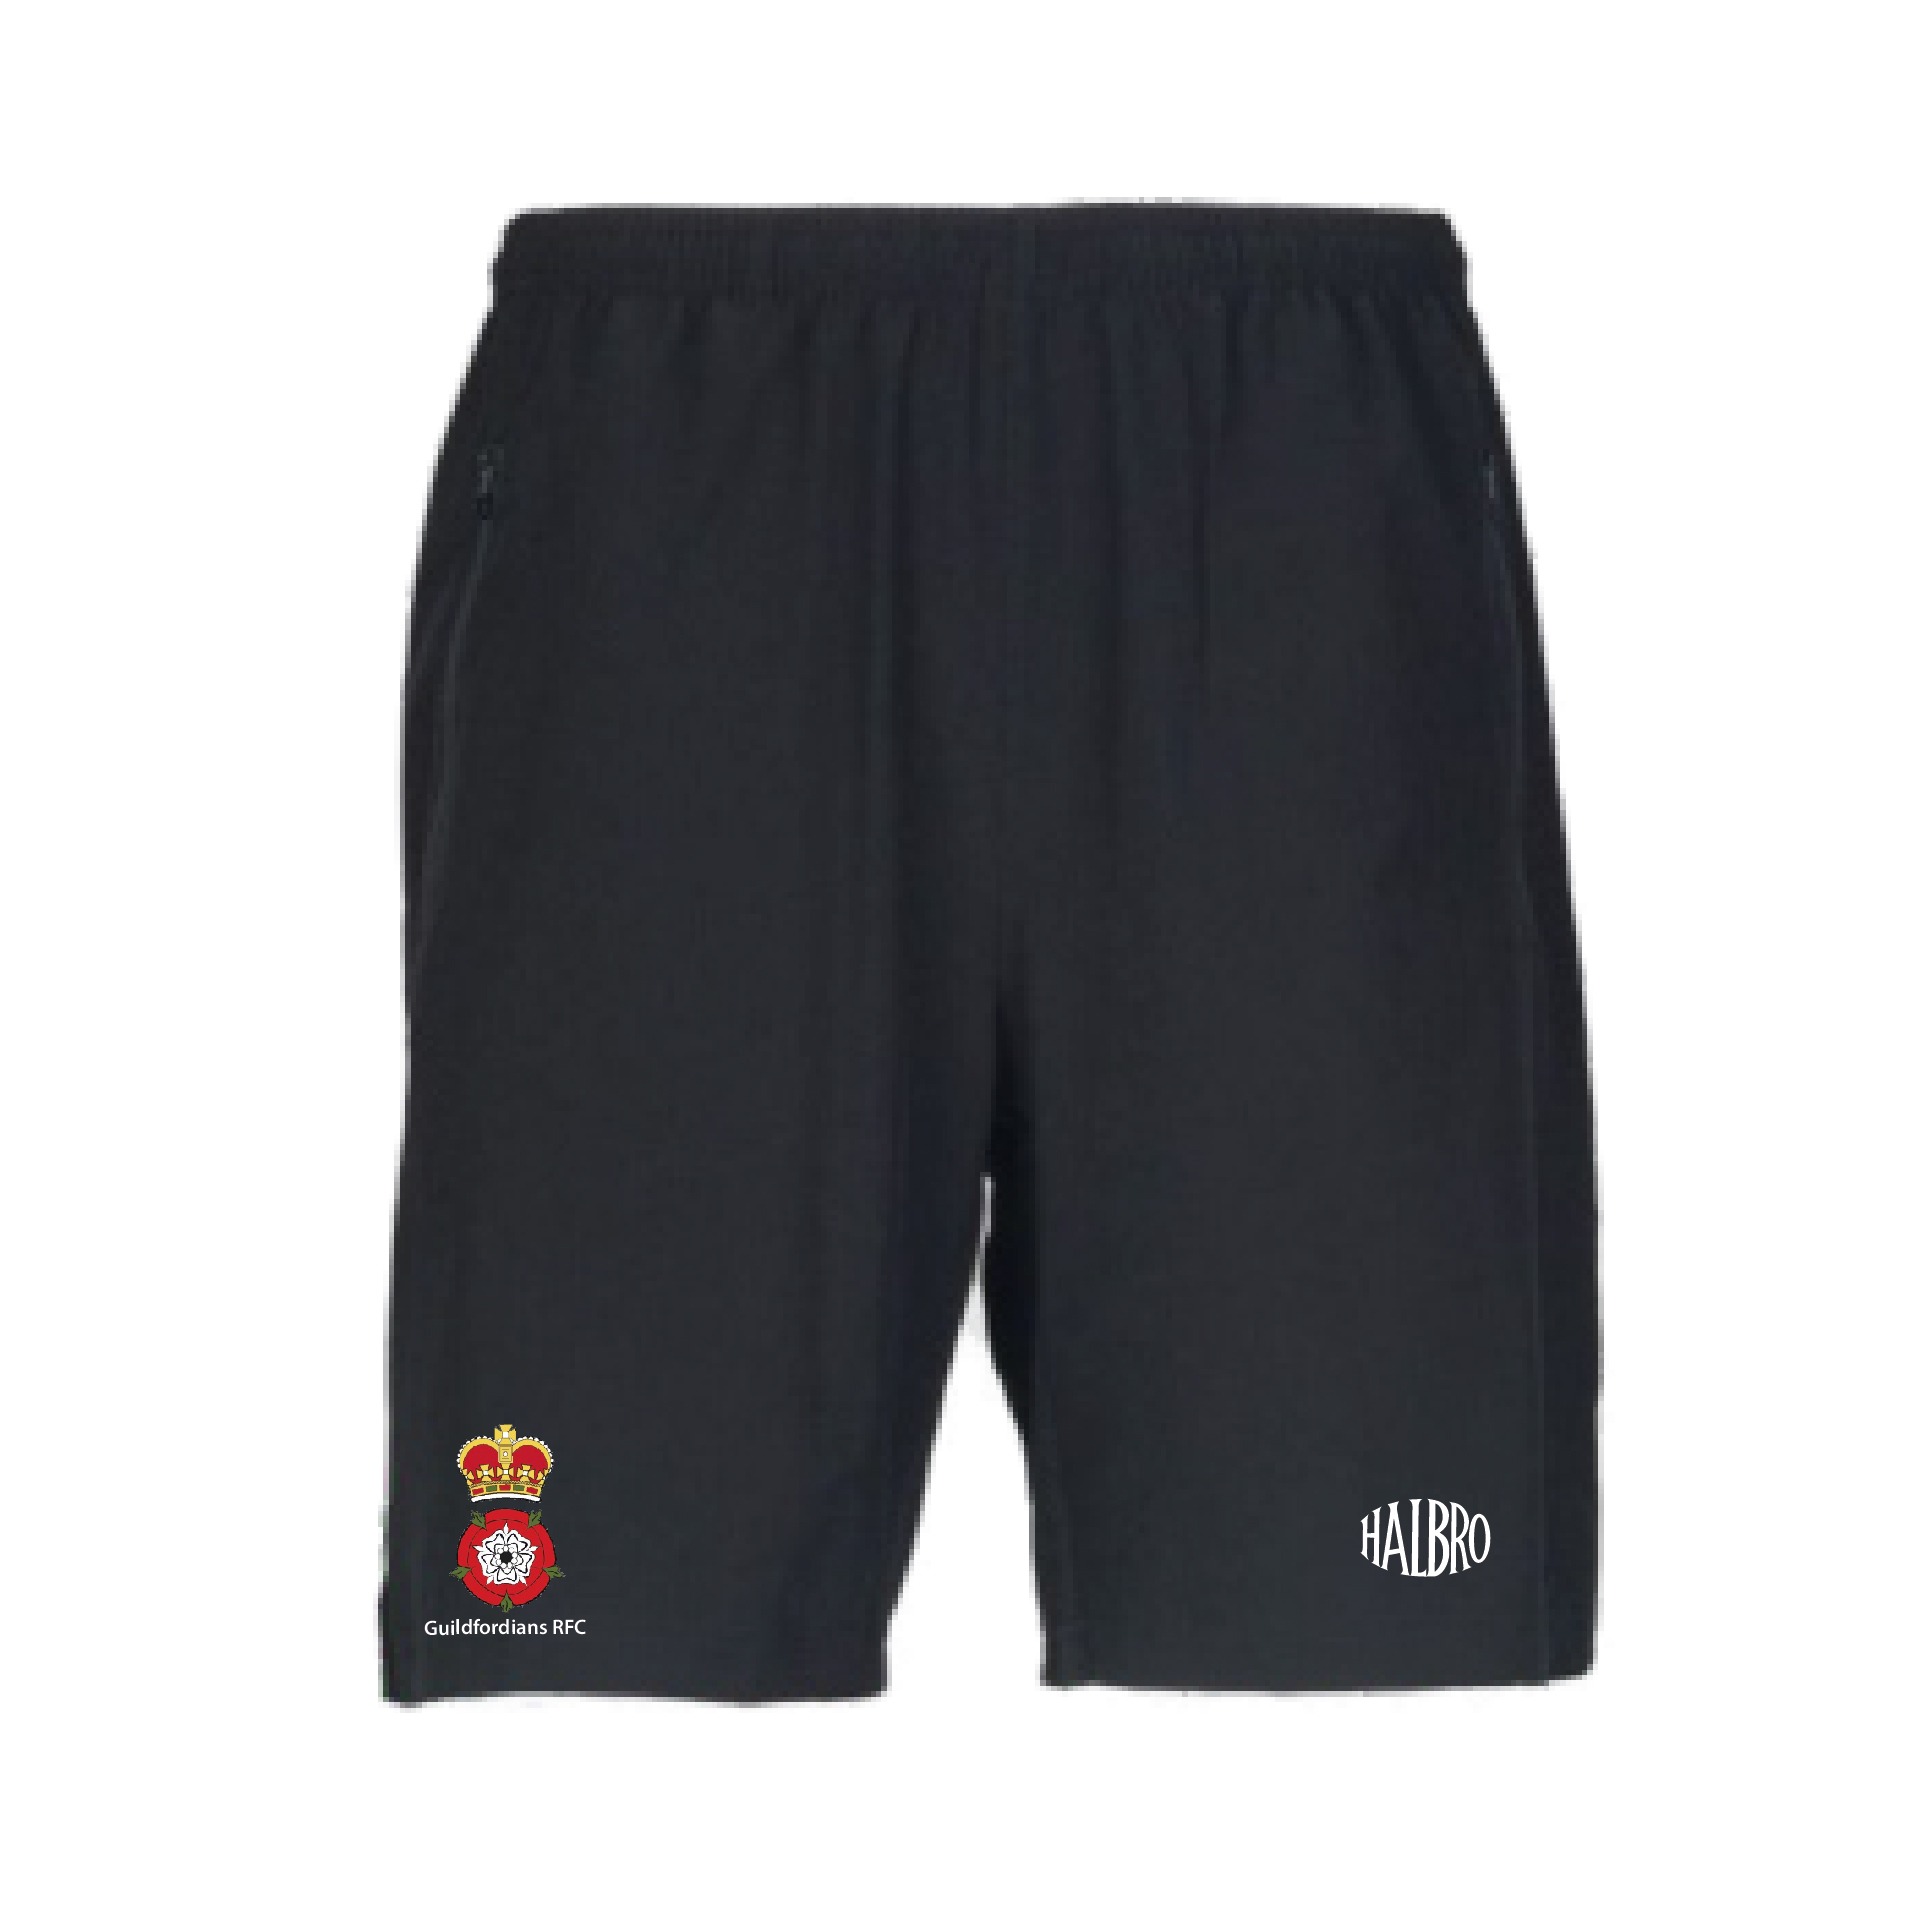 Guildfordians RFC Seniors Gym Shorts - Halbro Sportswear Limited